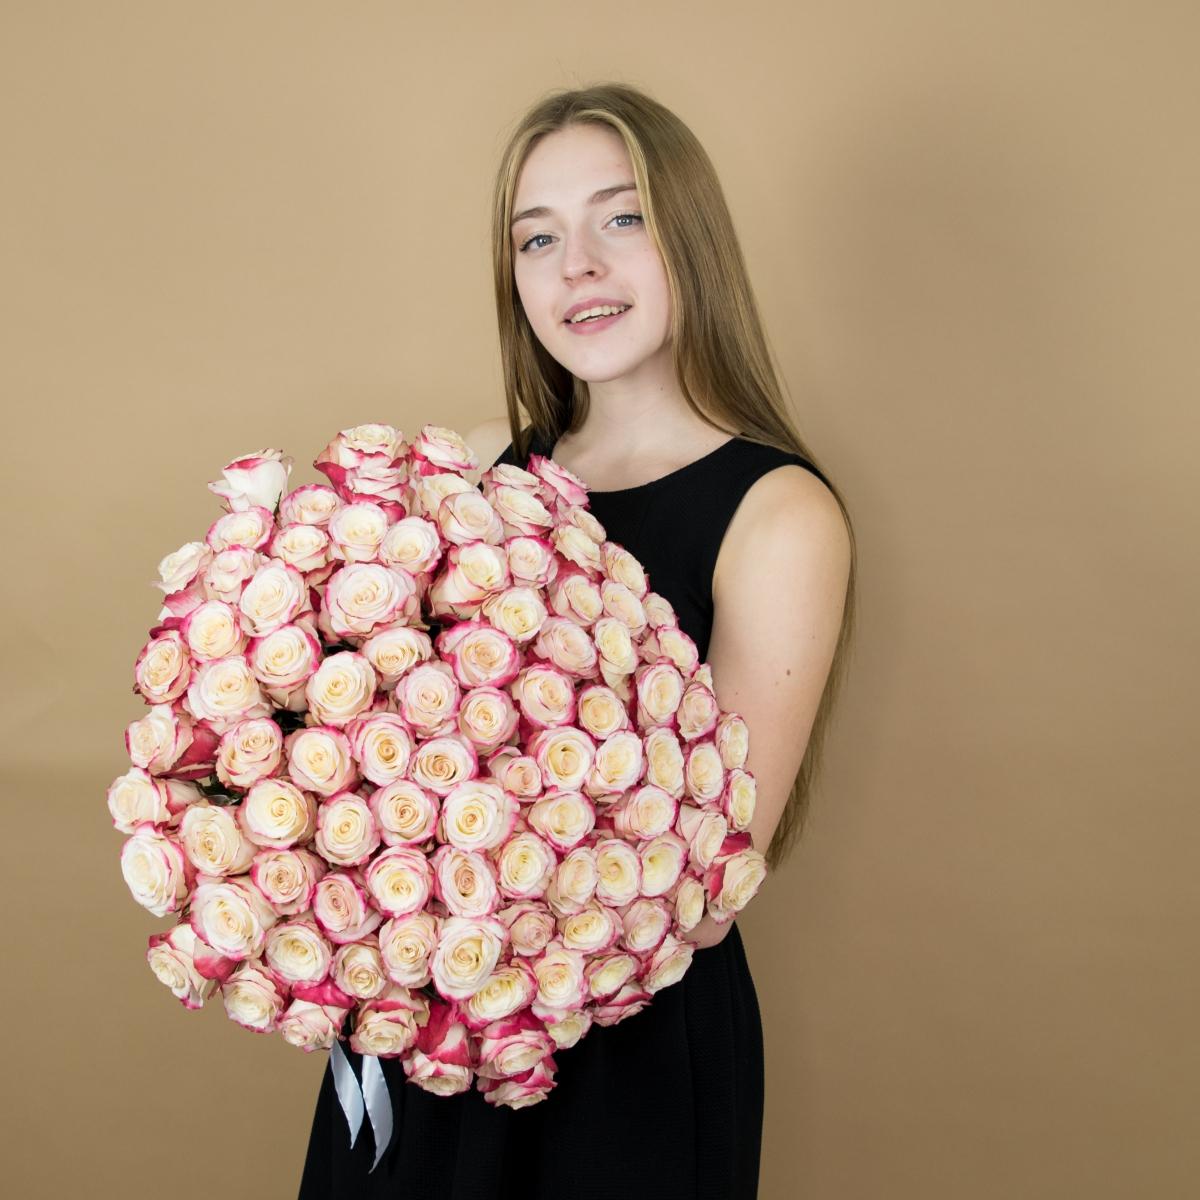 Розы красно-белые 101 шт. (40 см) [Артикул: 16020]